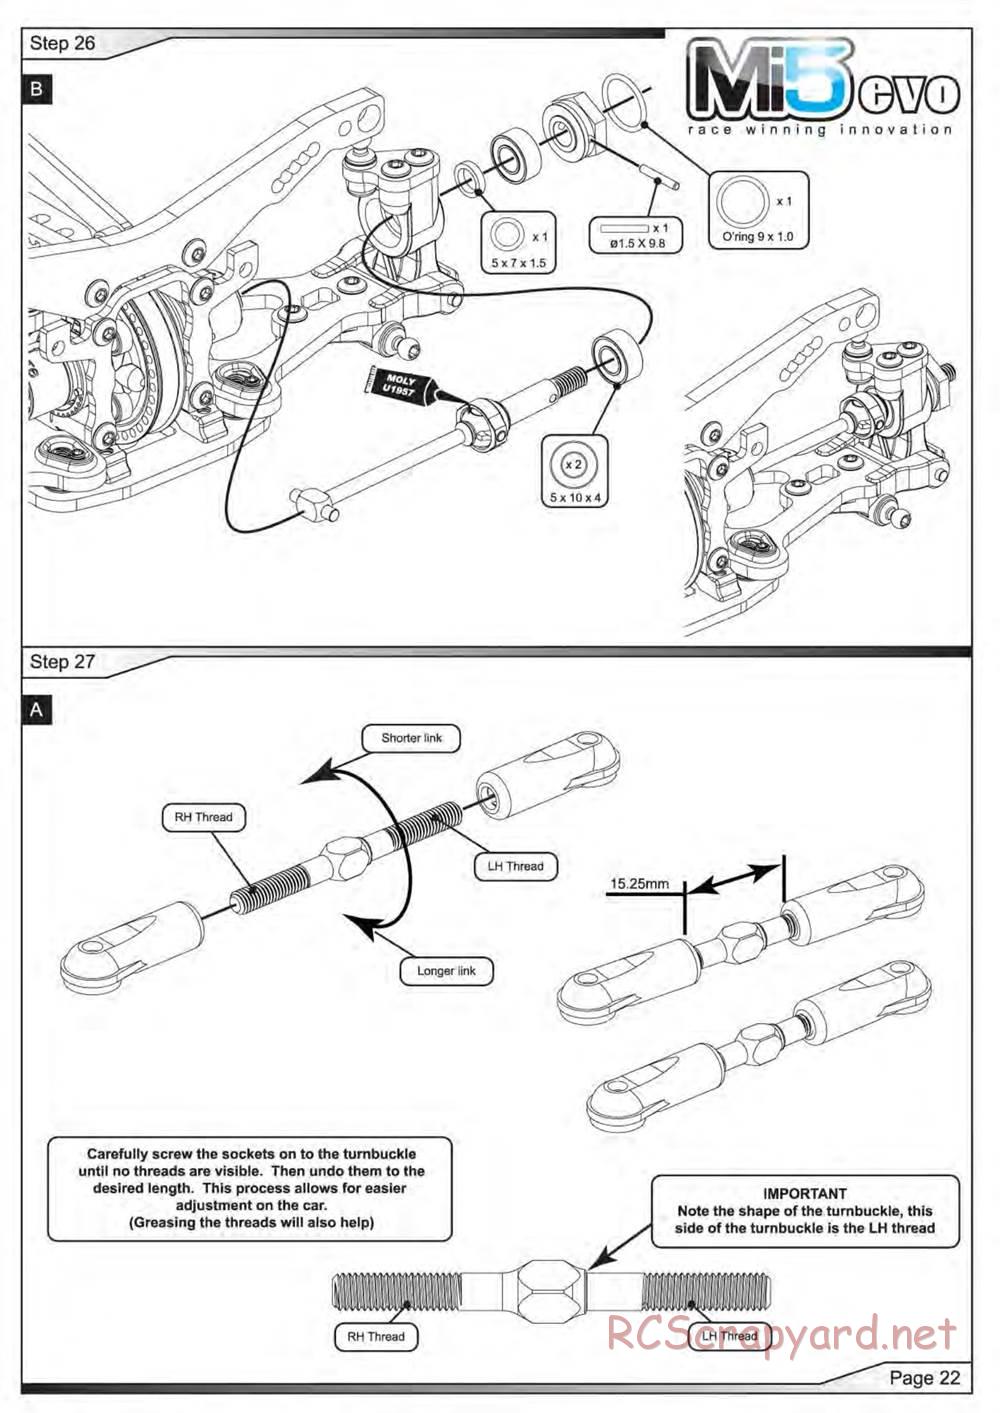 Schumacher - Mi5 Evo - Manual - Page 23